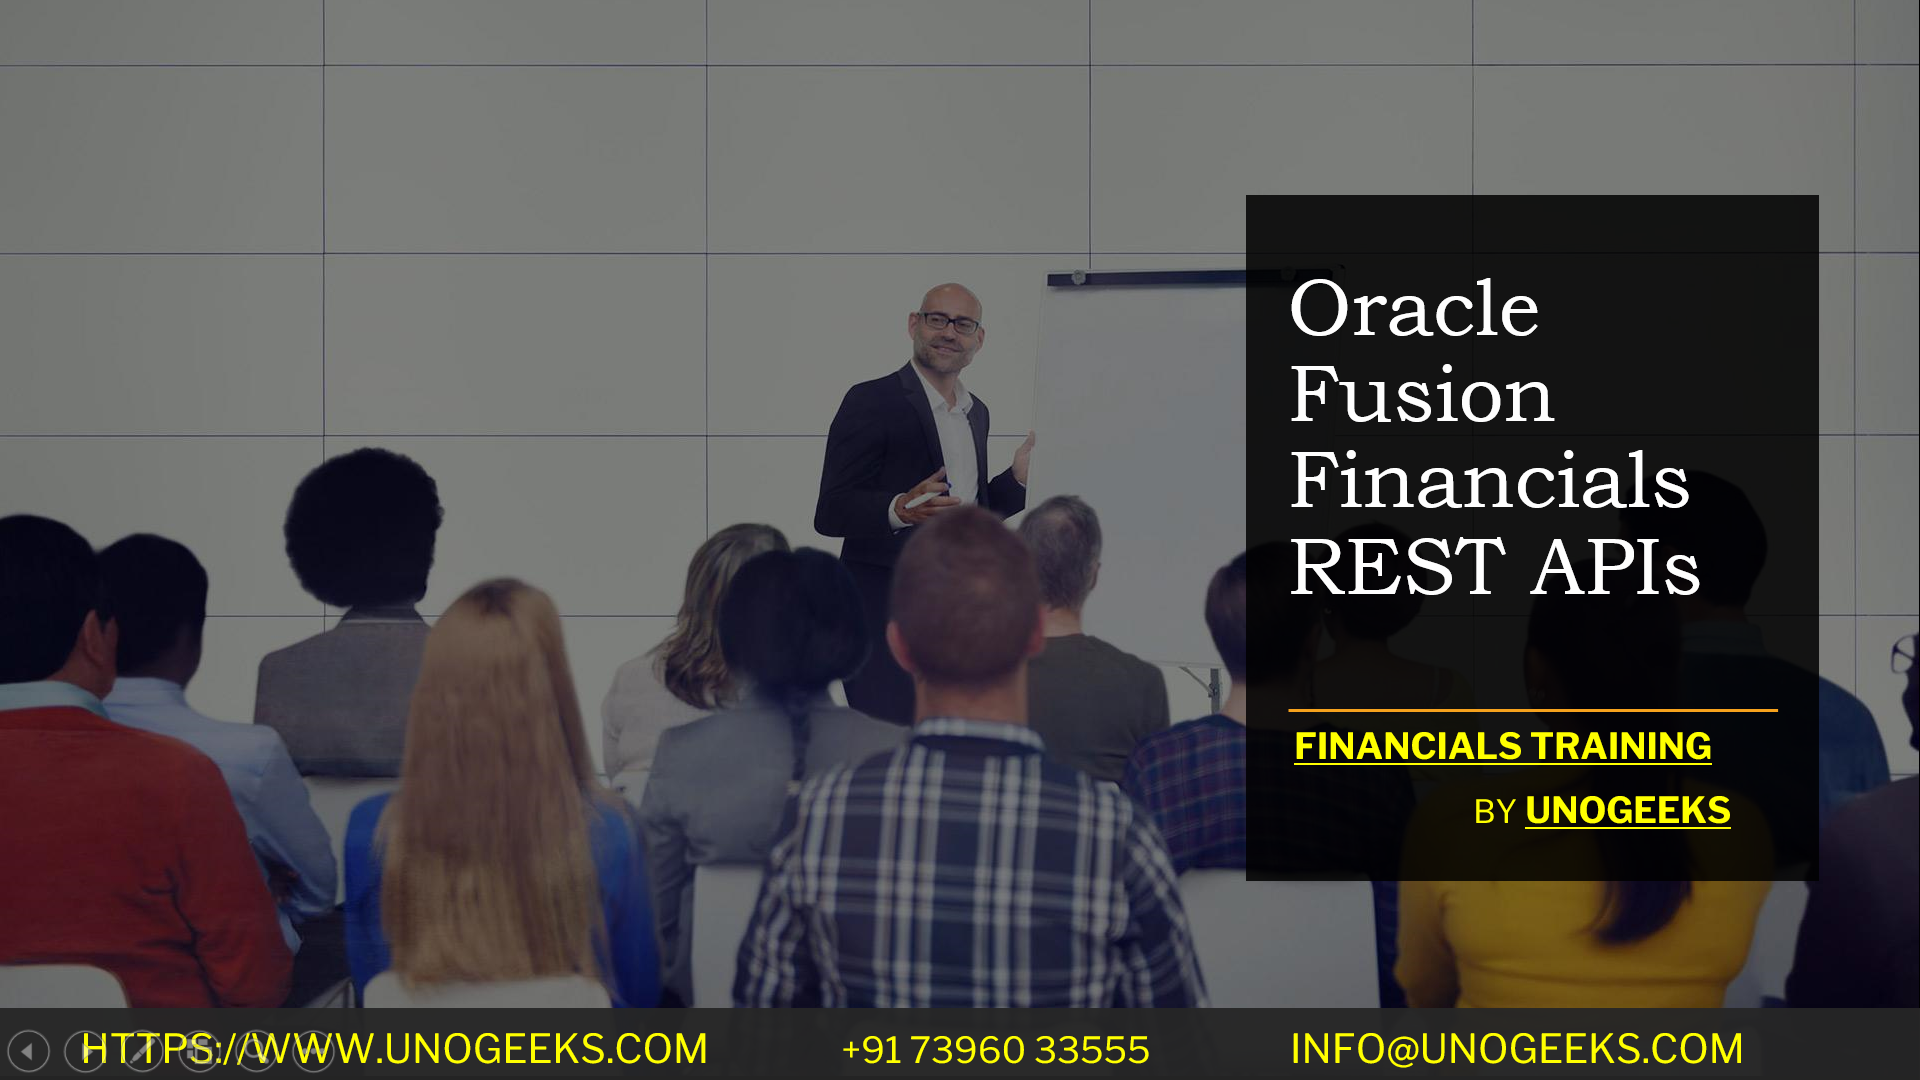 Oracle Fusion Financials REST APIs